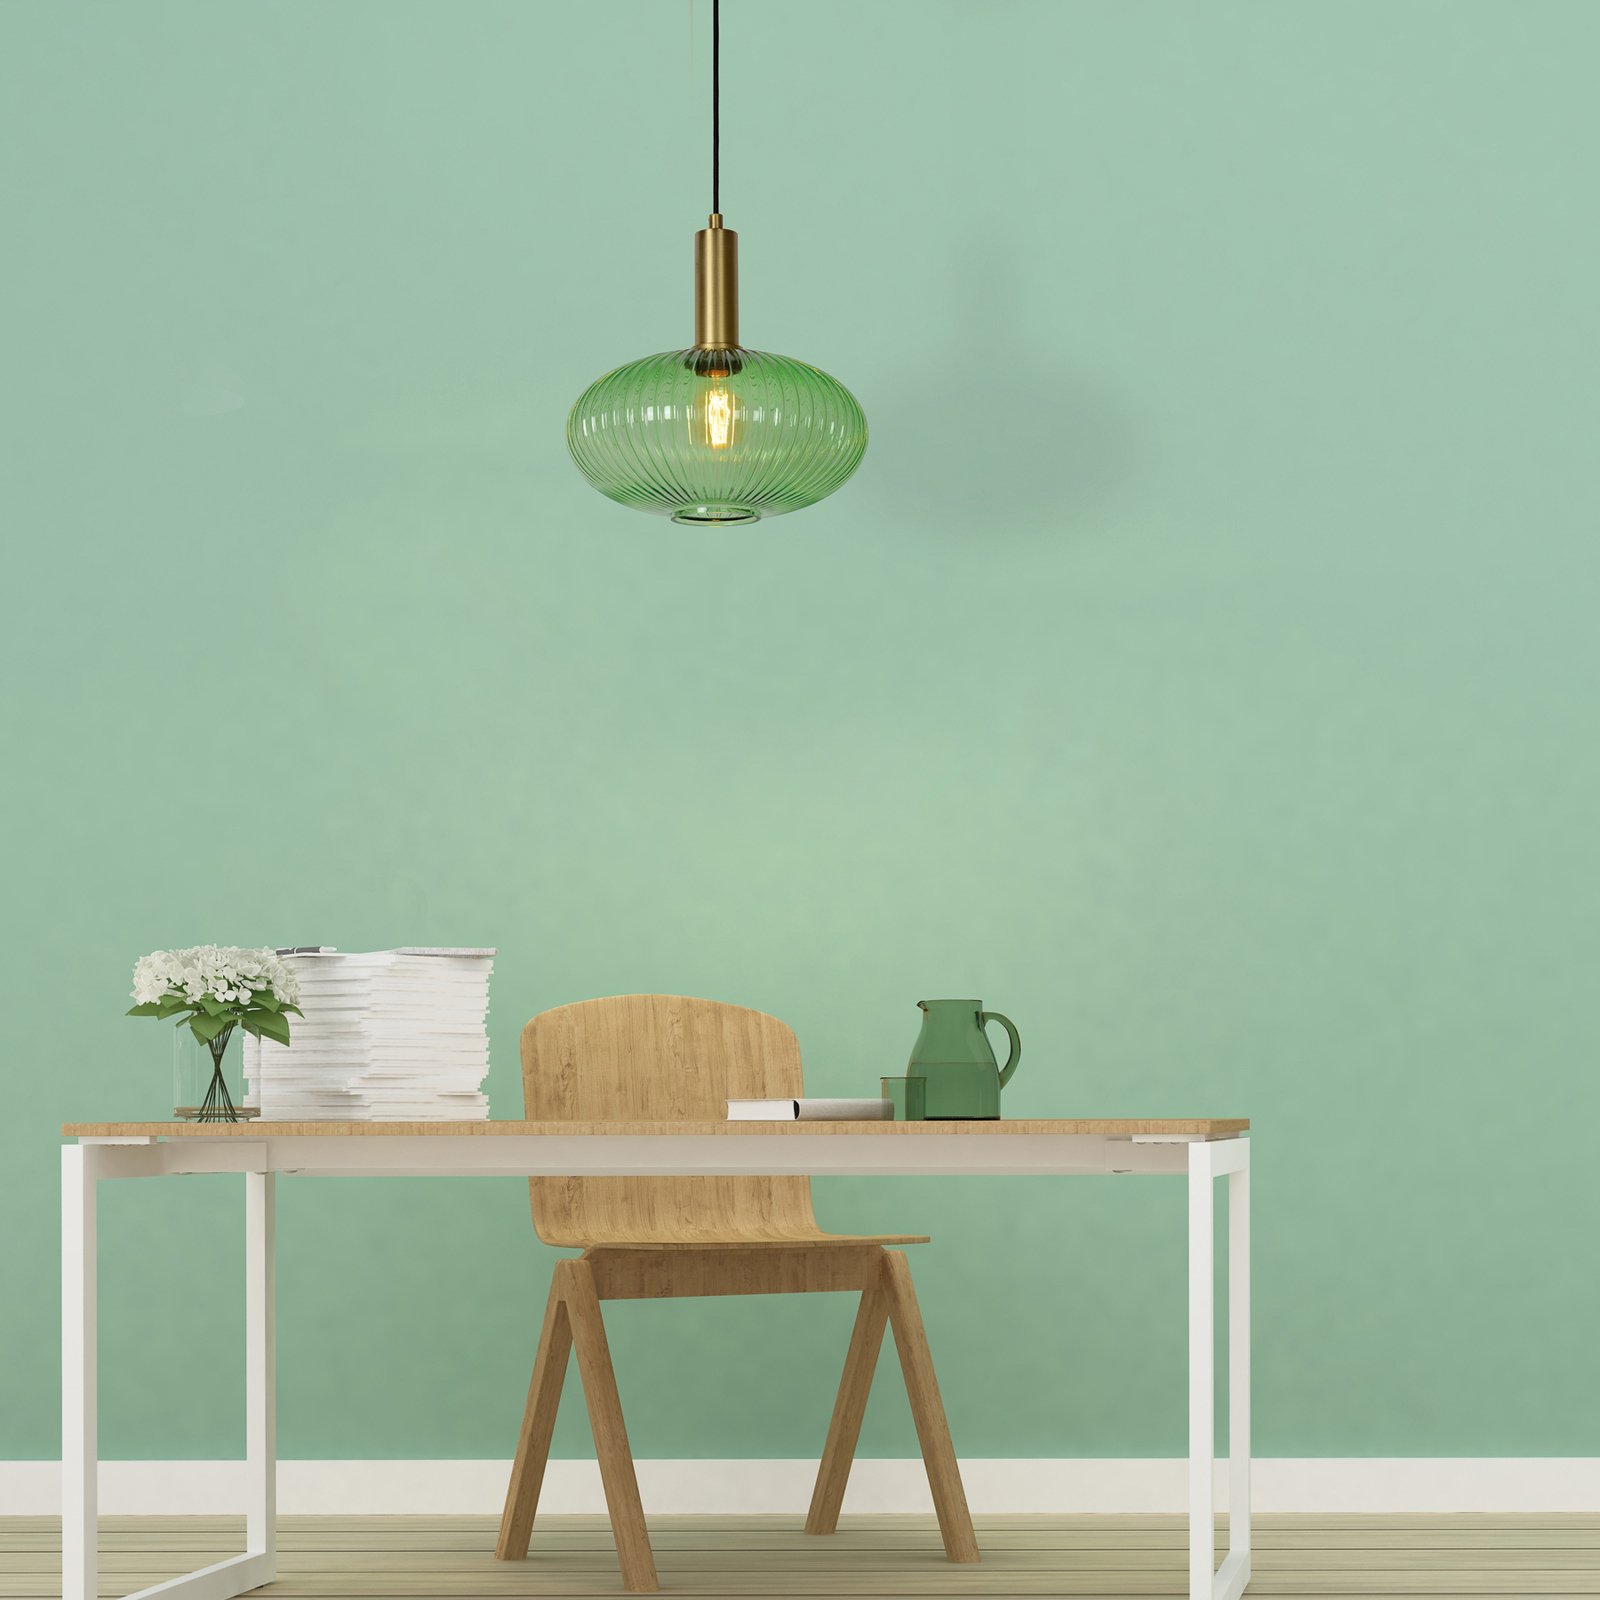 Glazen hanglamp Maloto, Ø 30 cm, groen